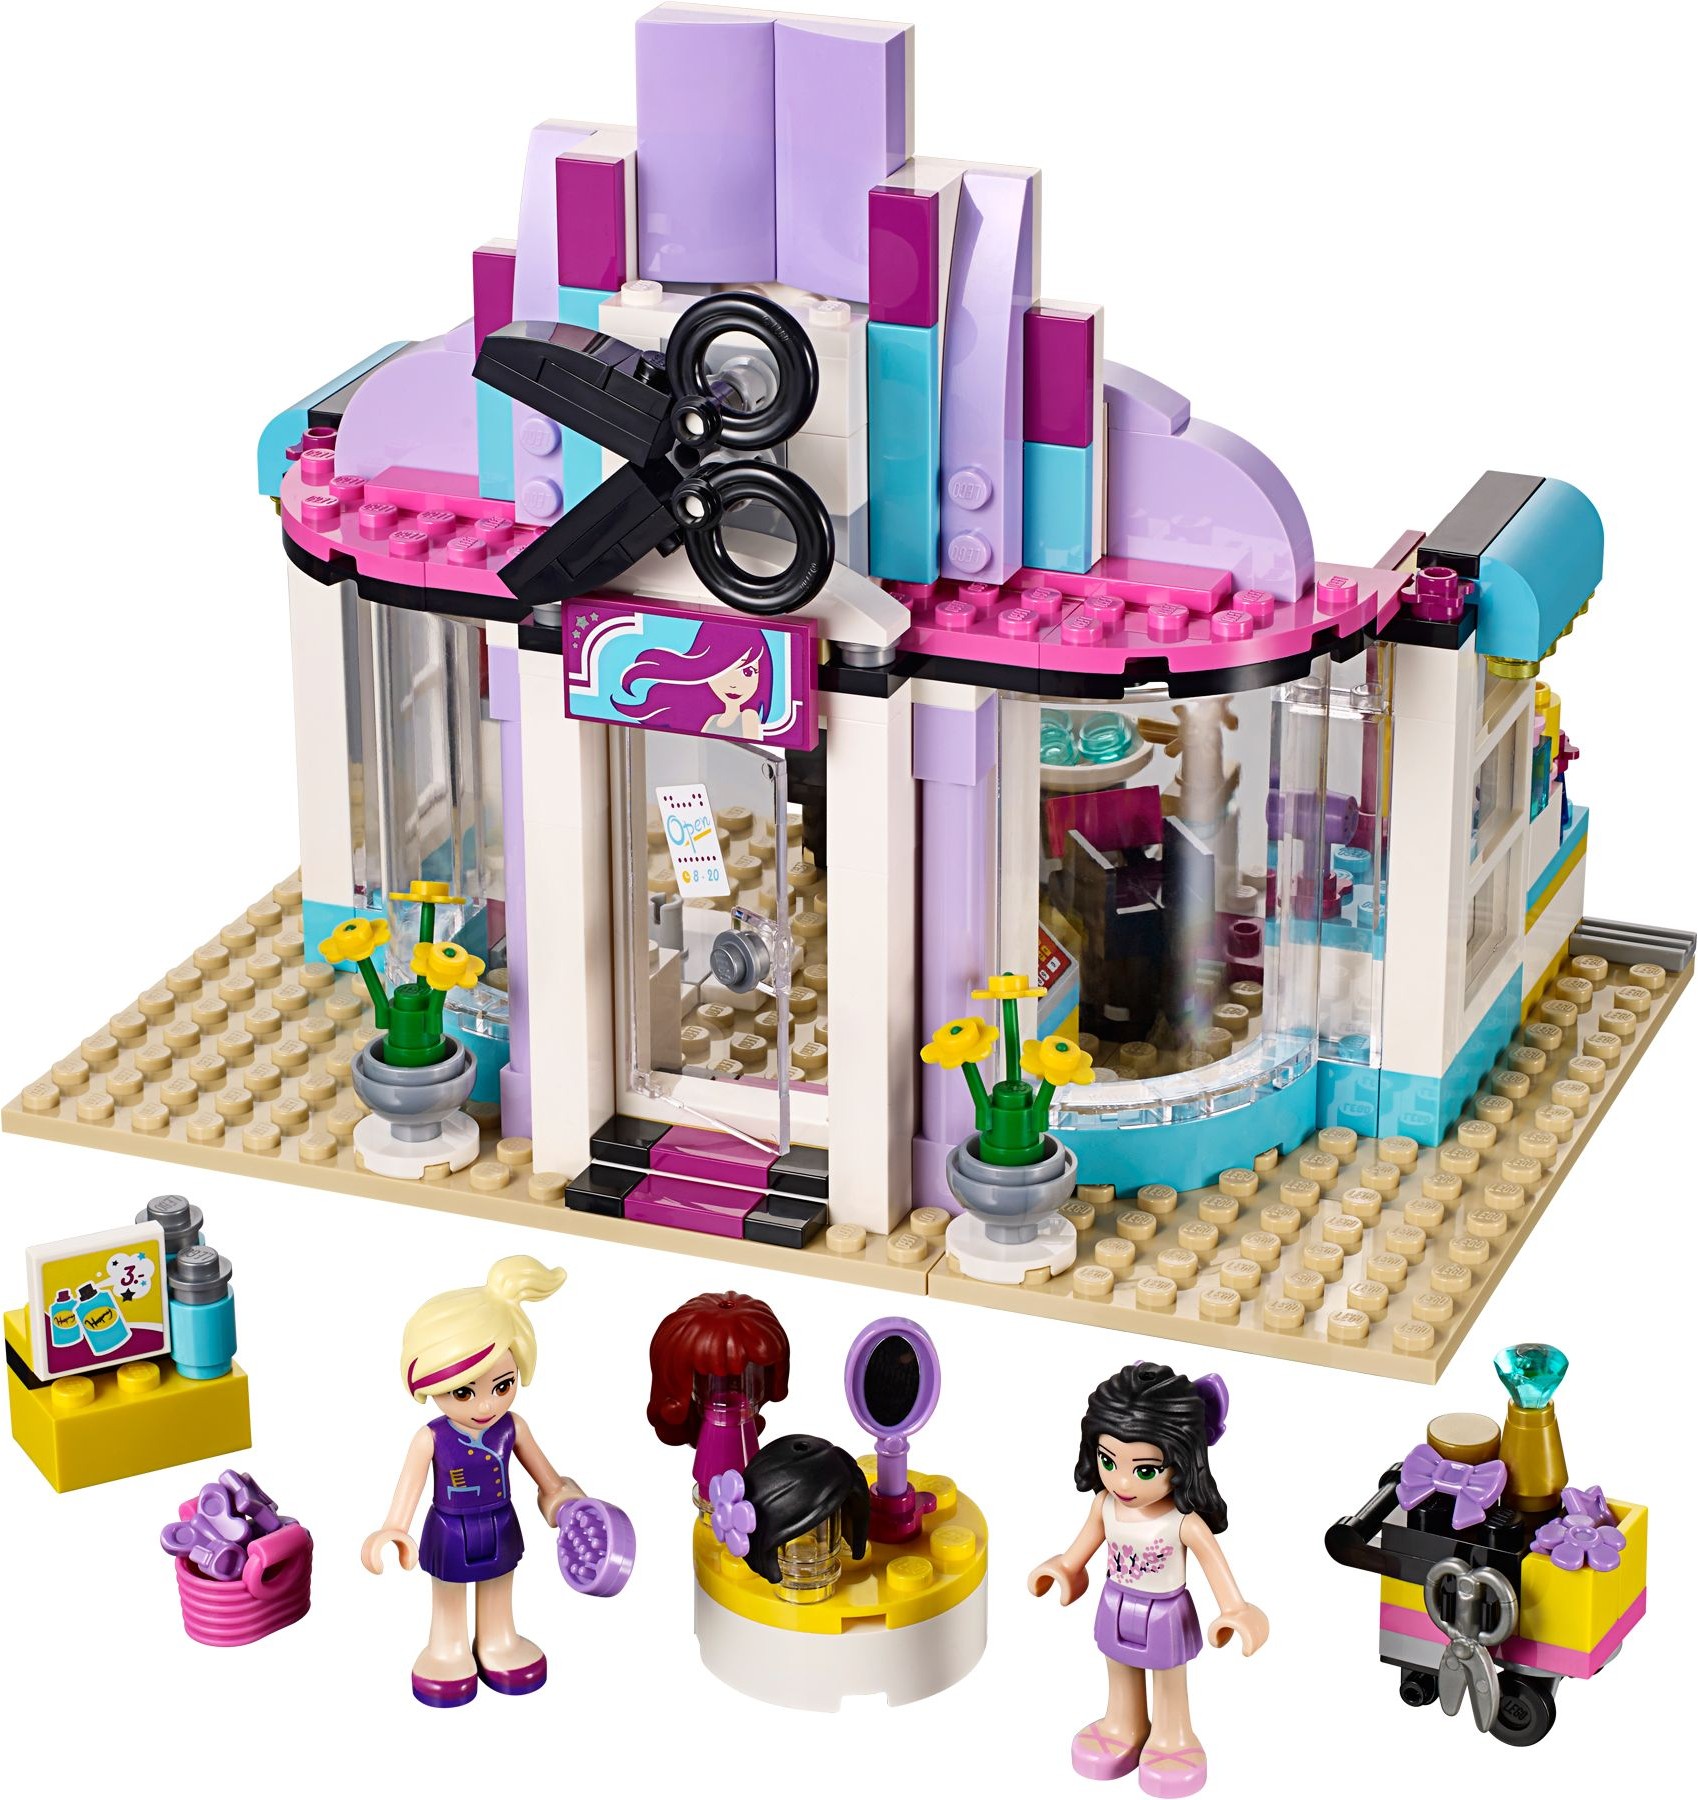 LEGO Friends Heartlake City | Brickset